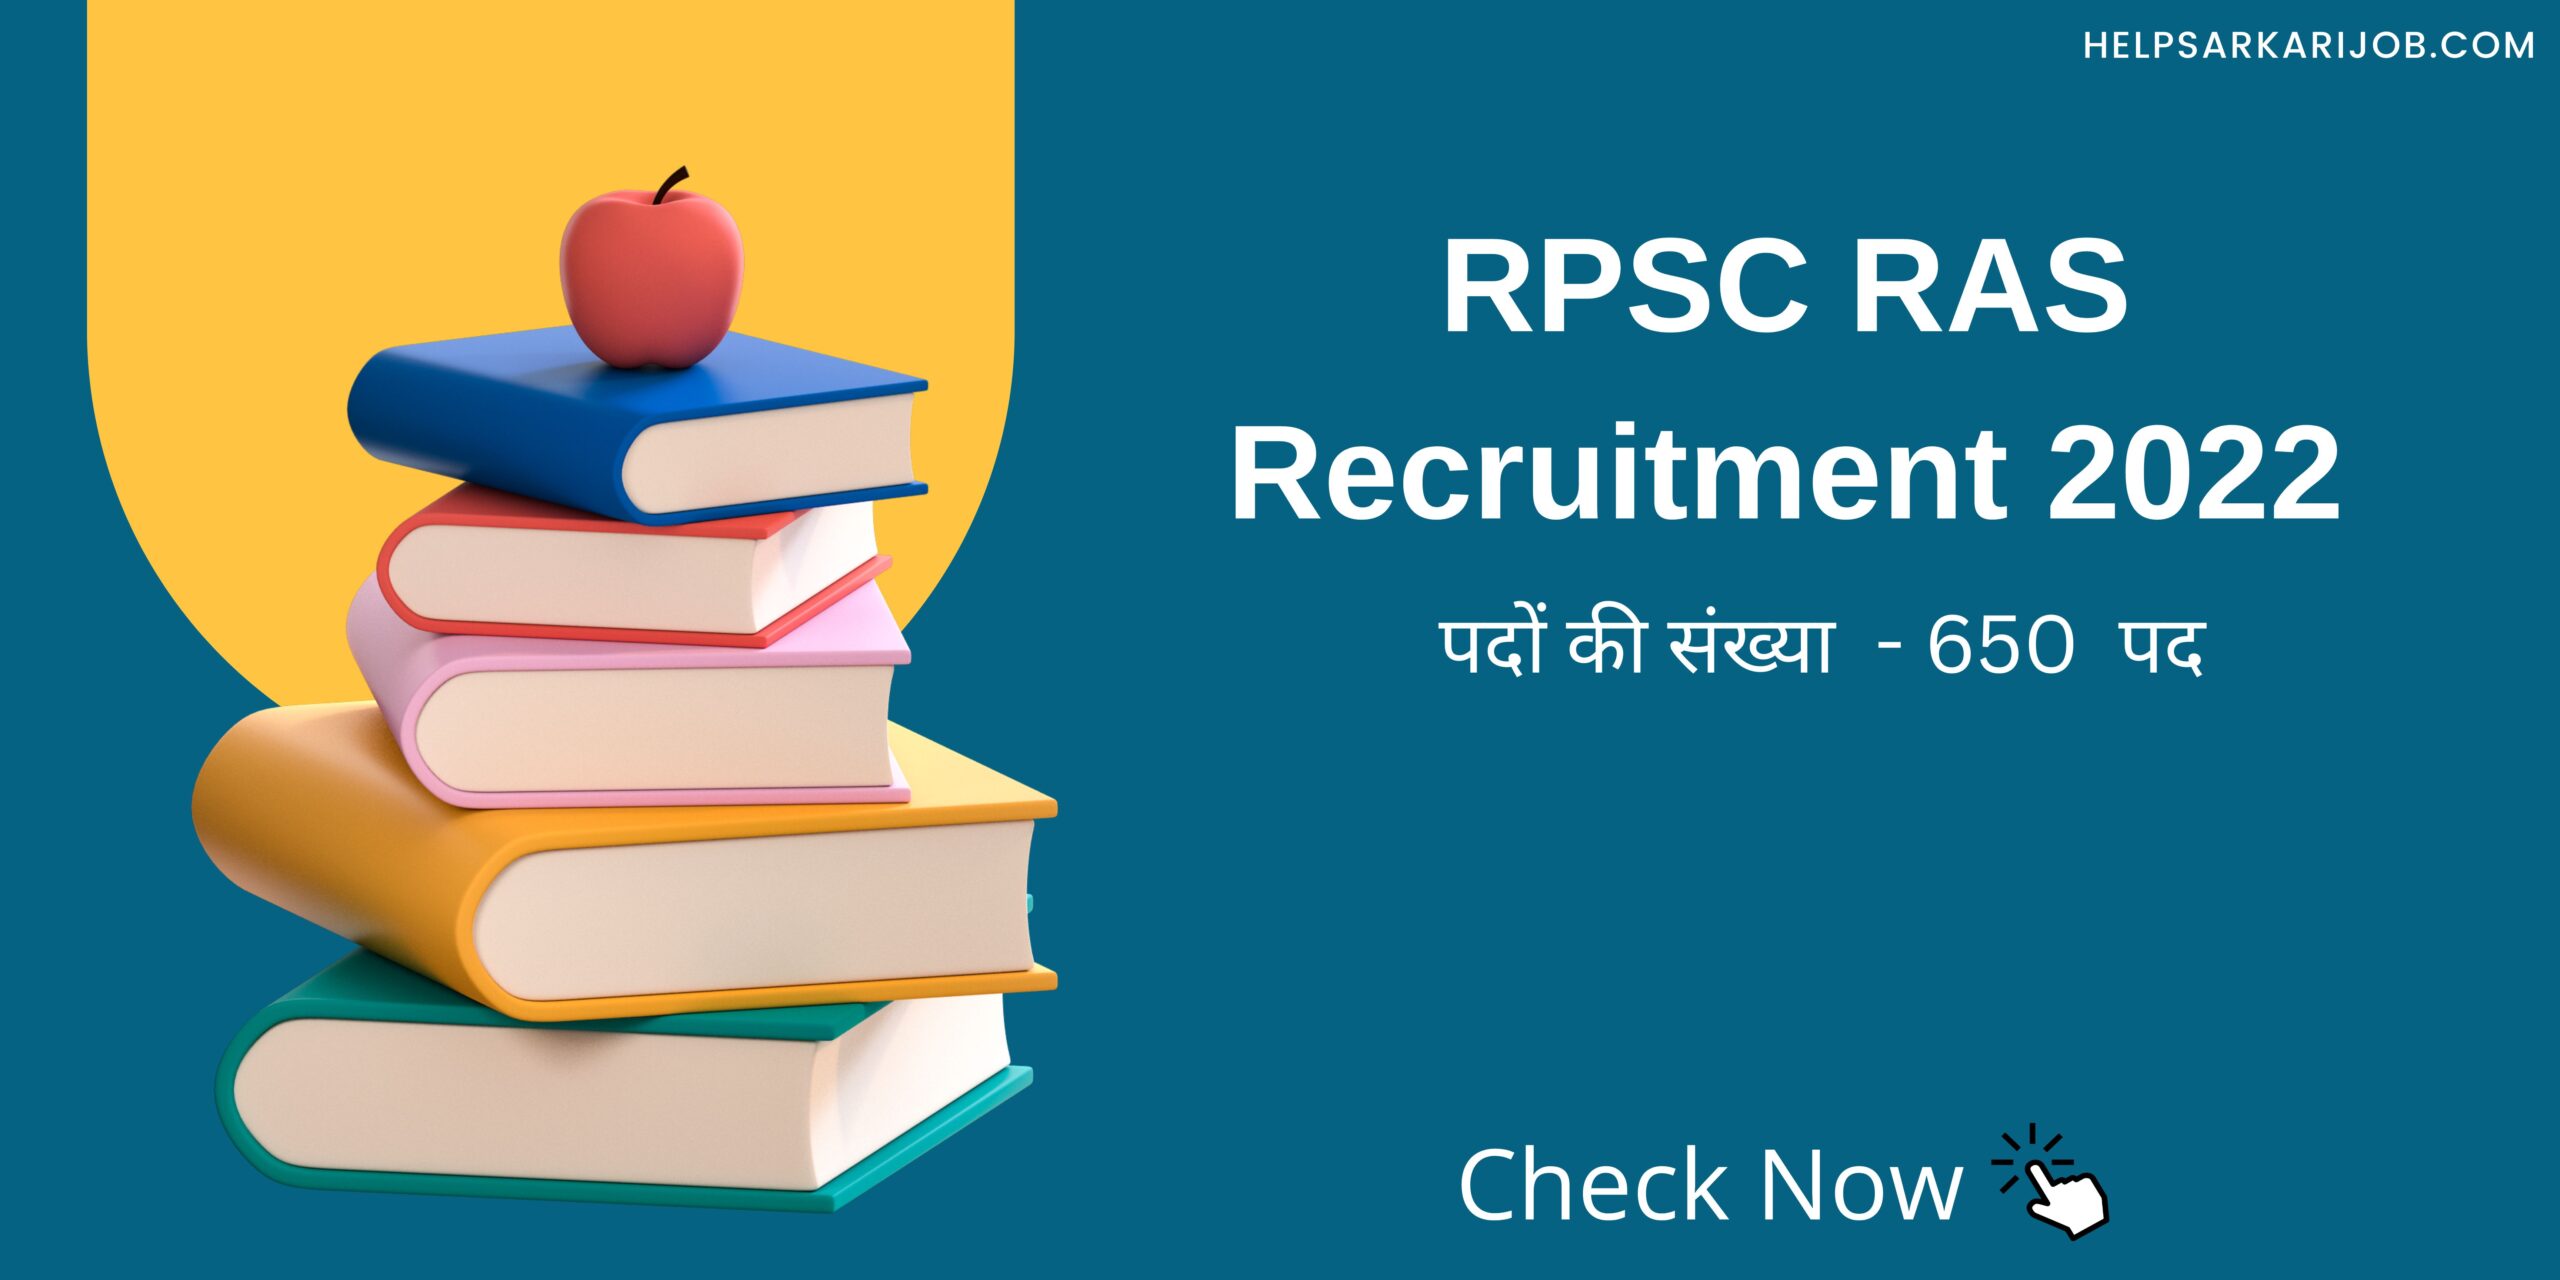 RPSC RAS Recruitment 2022